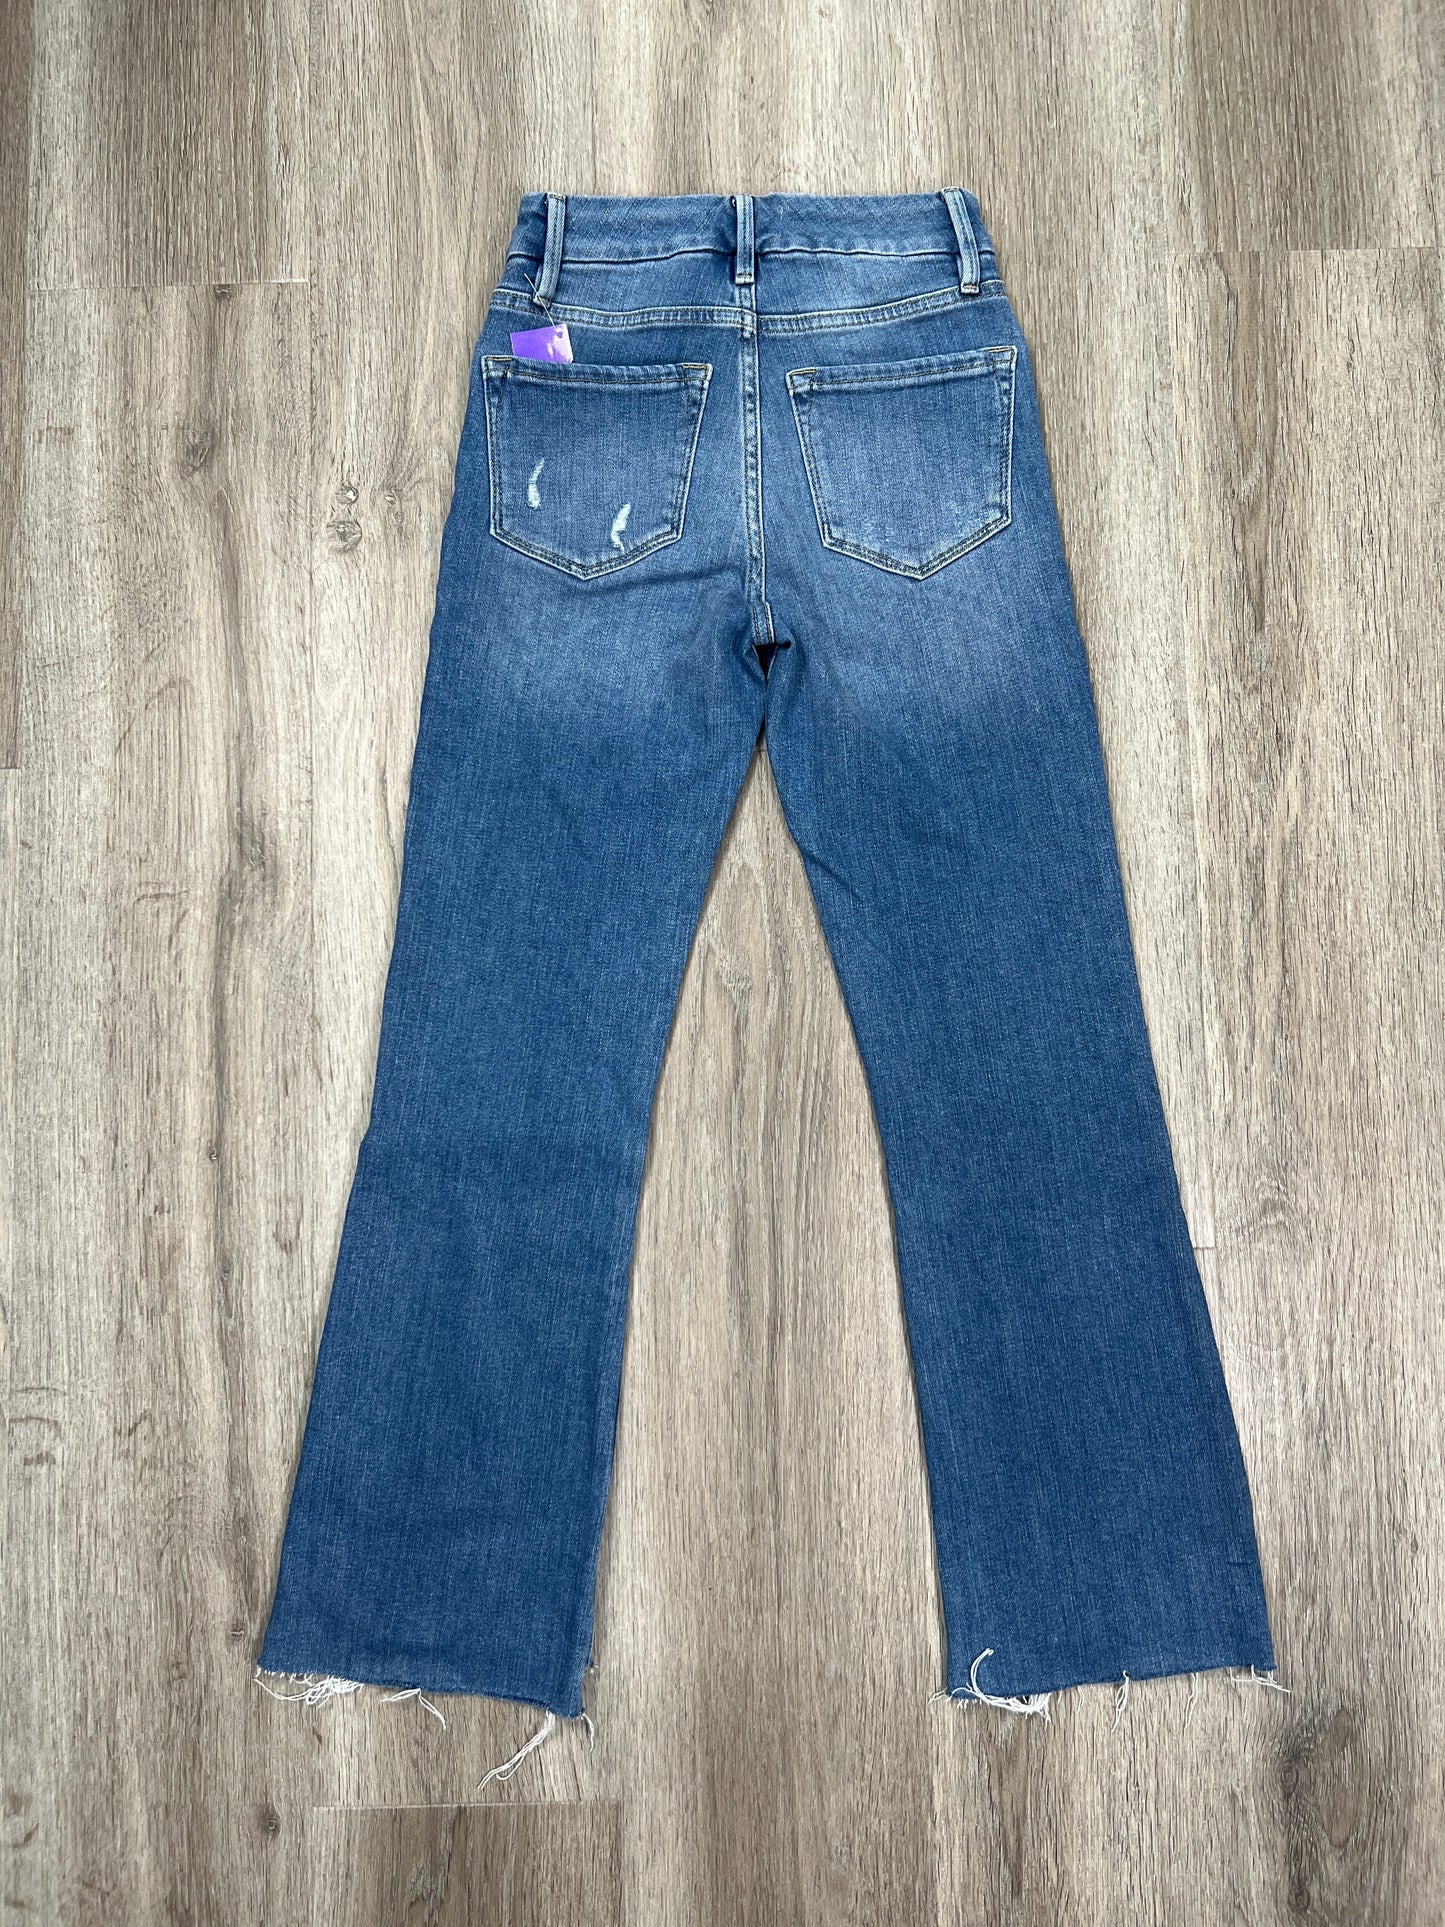 Blue Denim Jeans Boot Cut Frame, Size 00